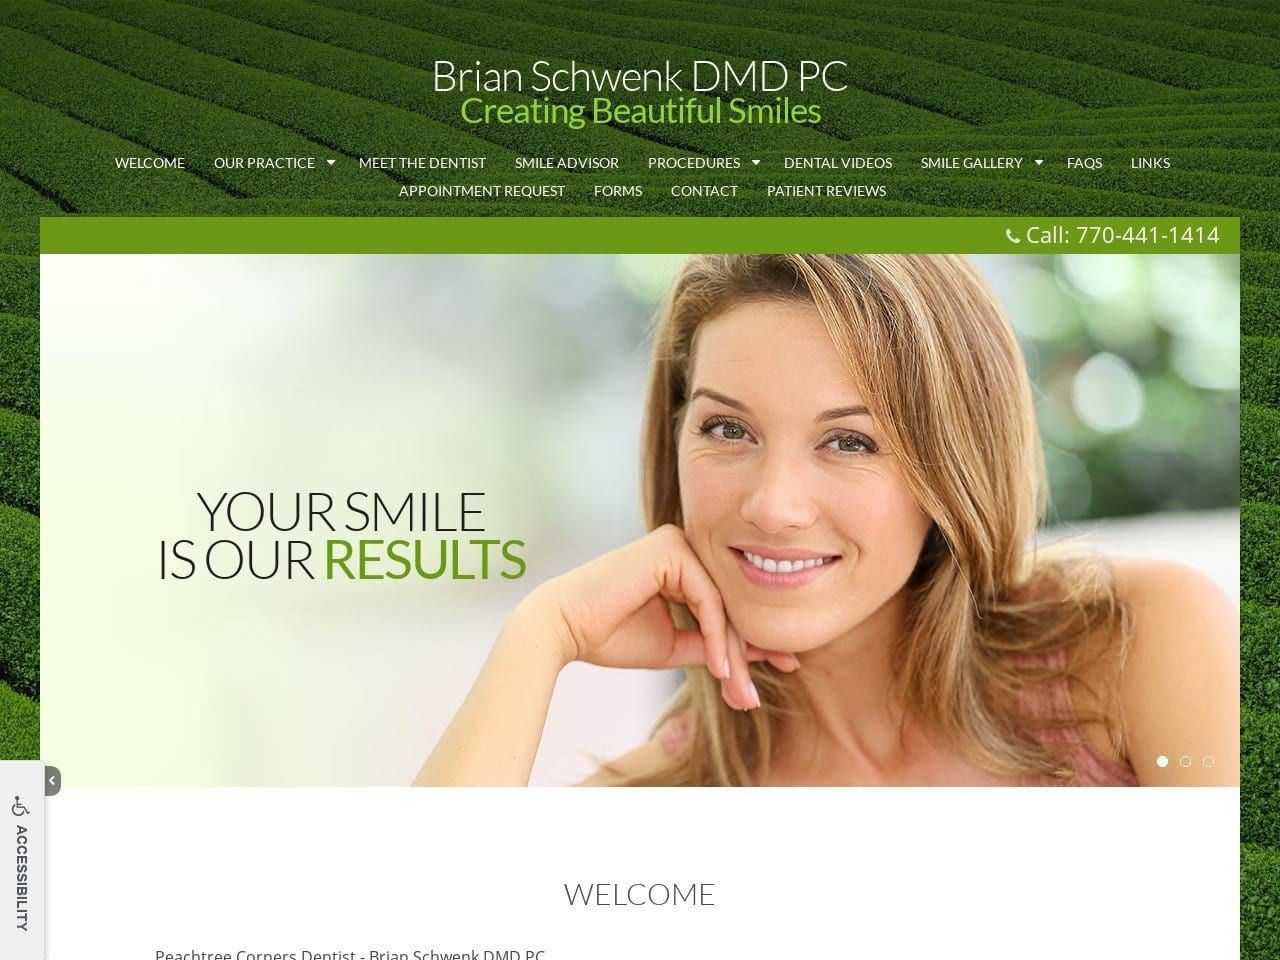 Brian Schwenk DMD PC Website Screenshot from peachtreecornersdentistry.com